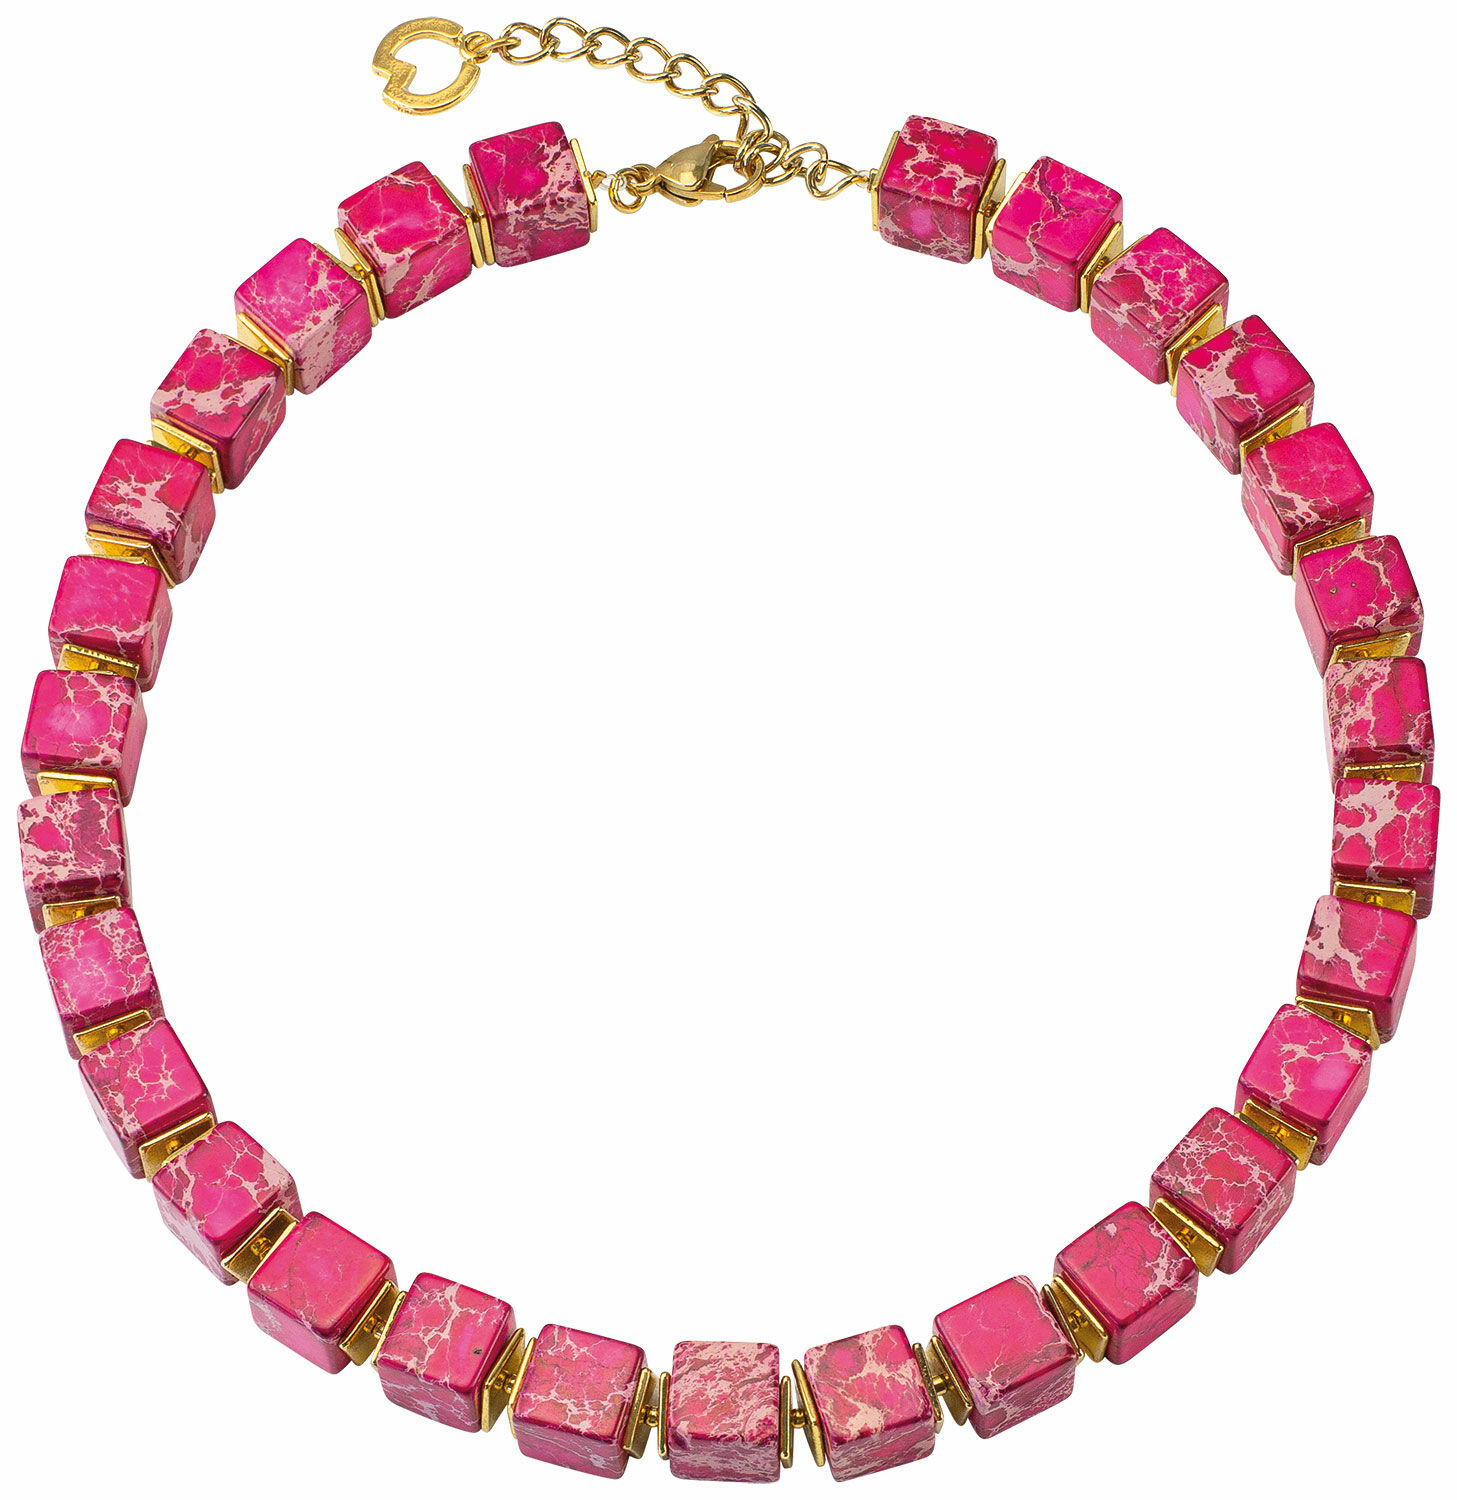 Necklace "Happy Pink" by Petra Waszak